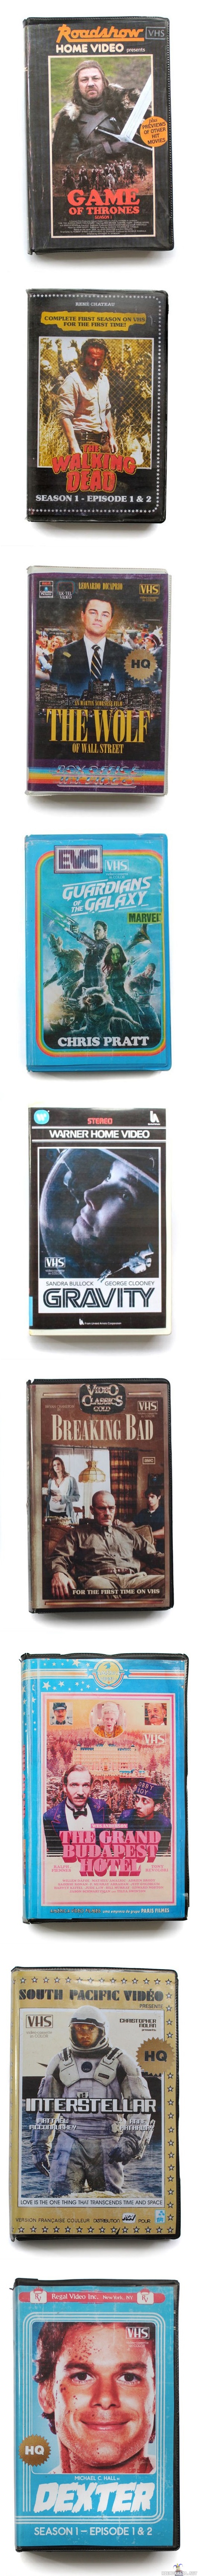 Nykysarjat ja leffat VHS-muodossa